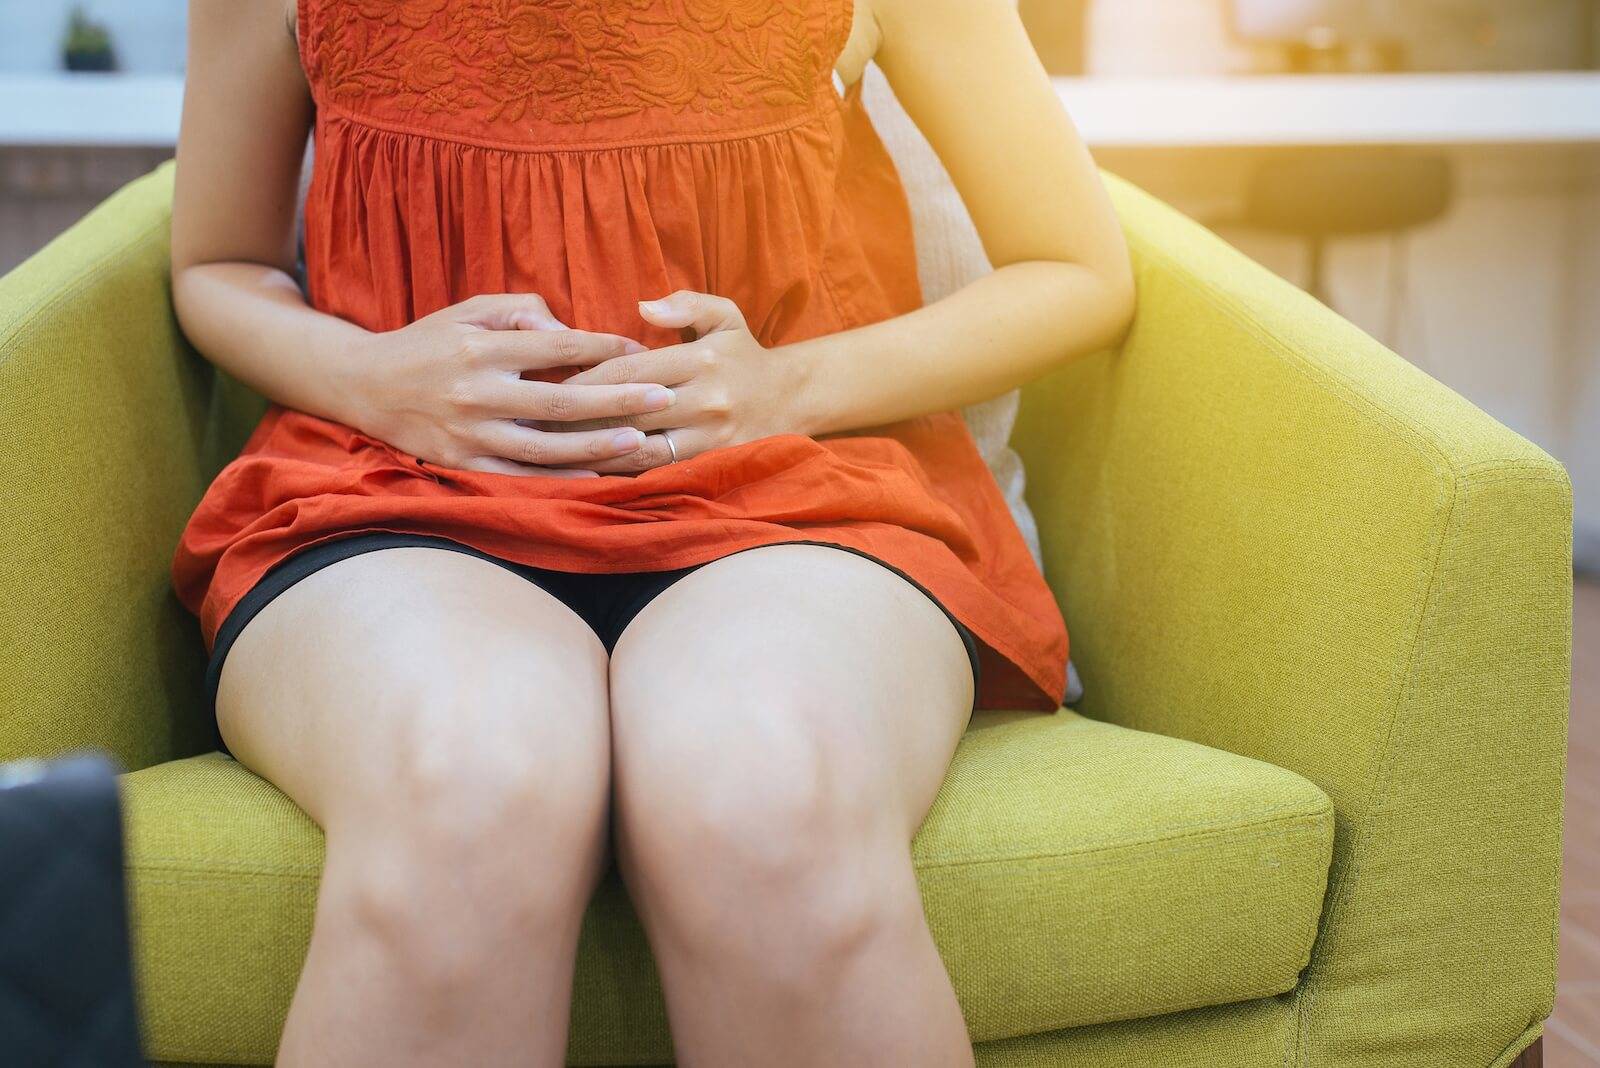 Crohn's Disease and Ulcerative Colitis